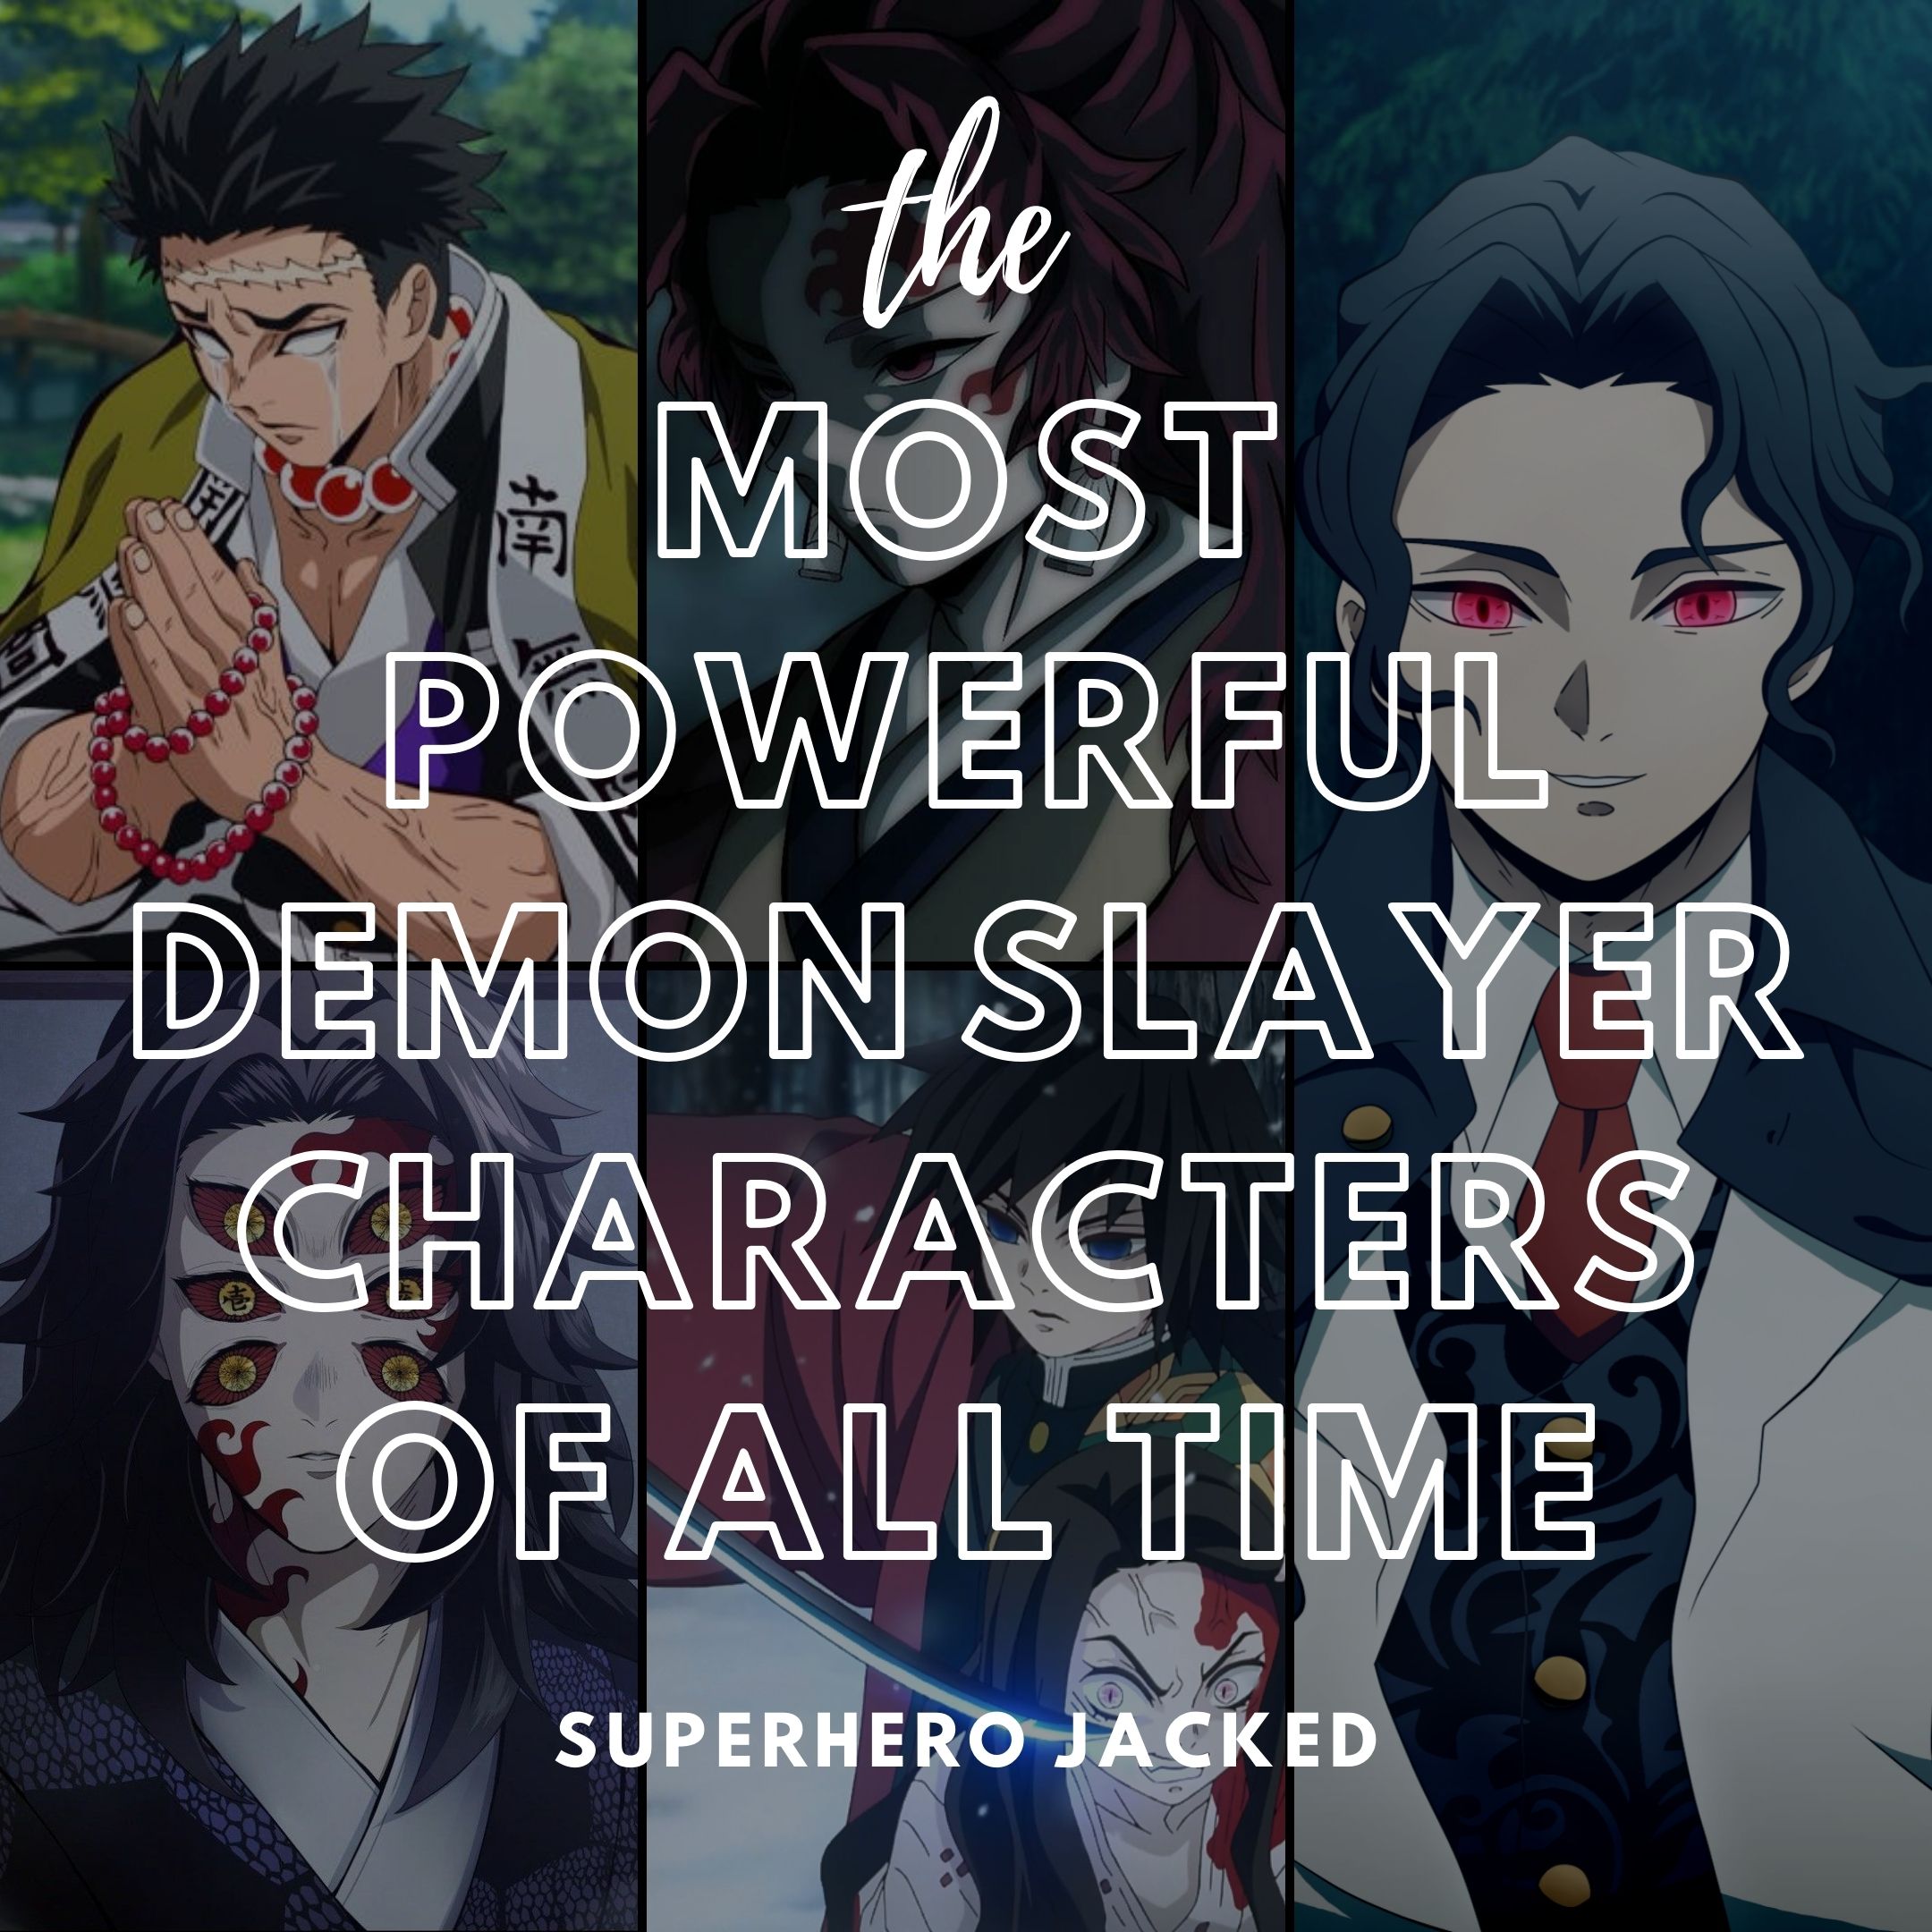 Demon Slayer Characters